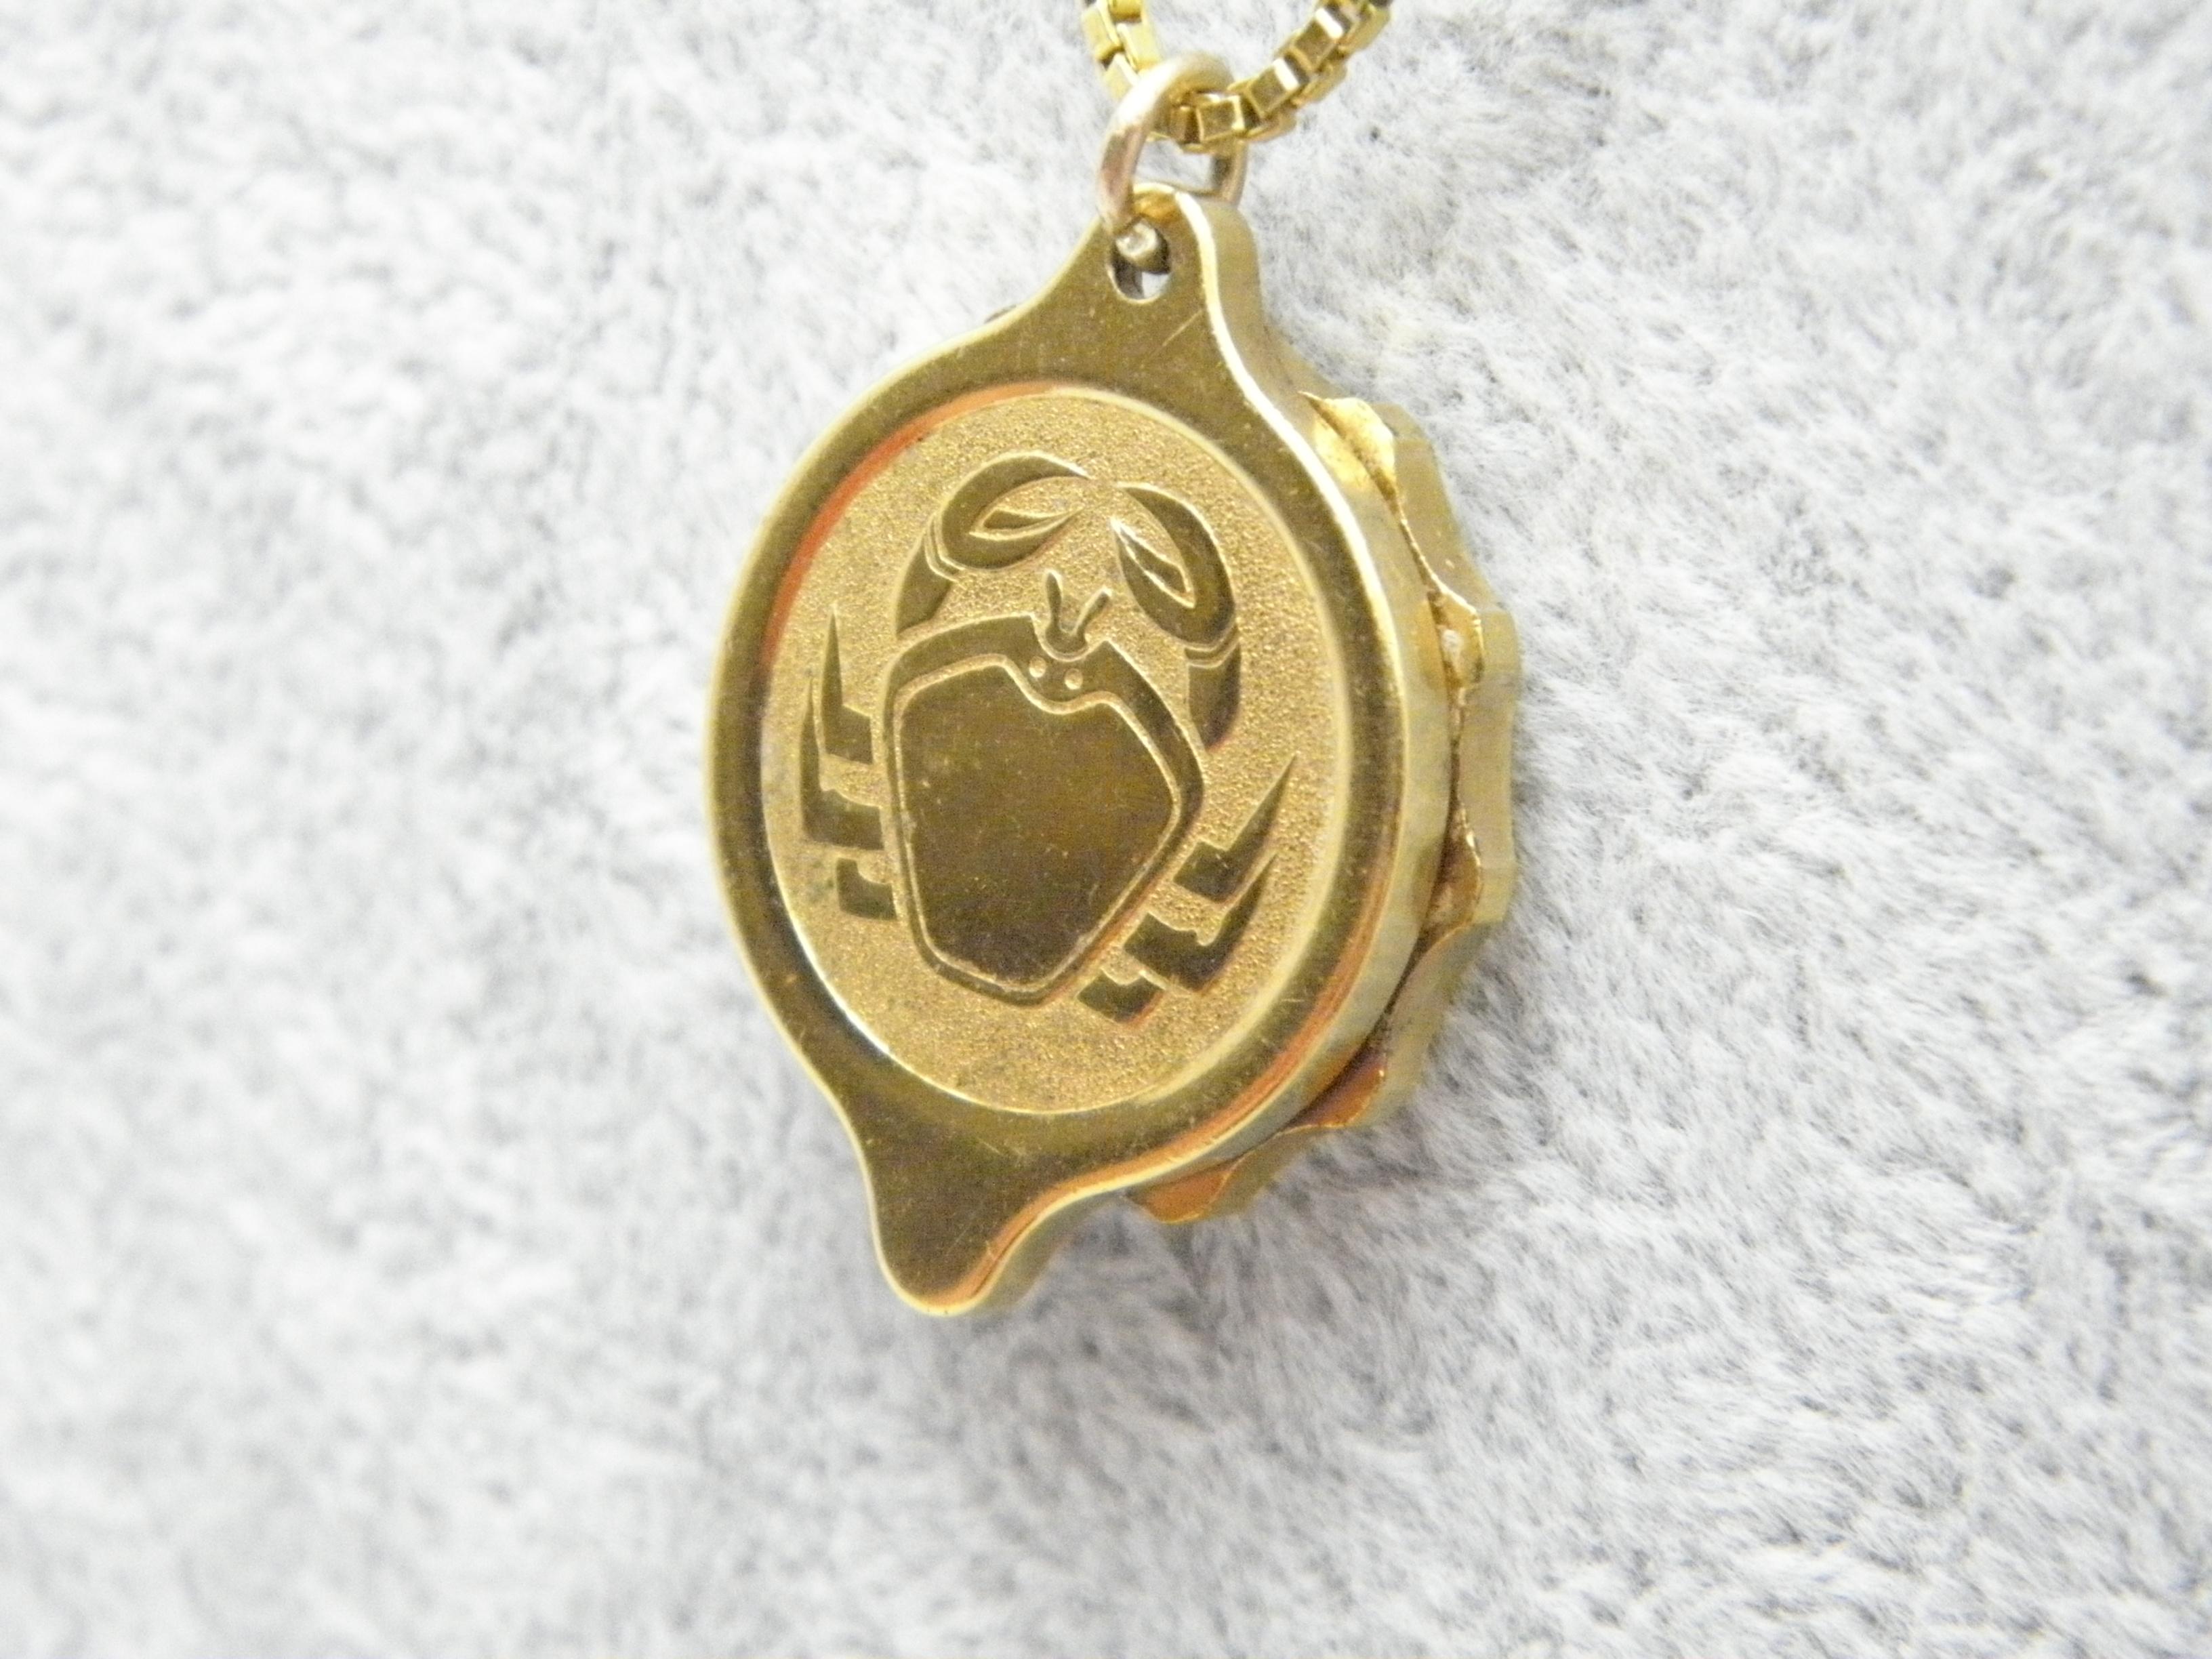 9ct gold rangers pendant